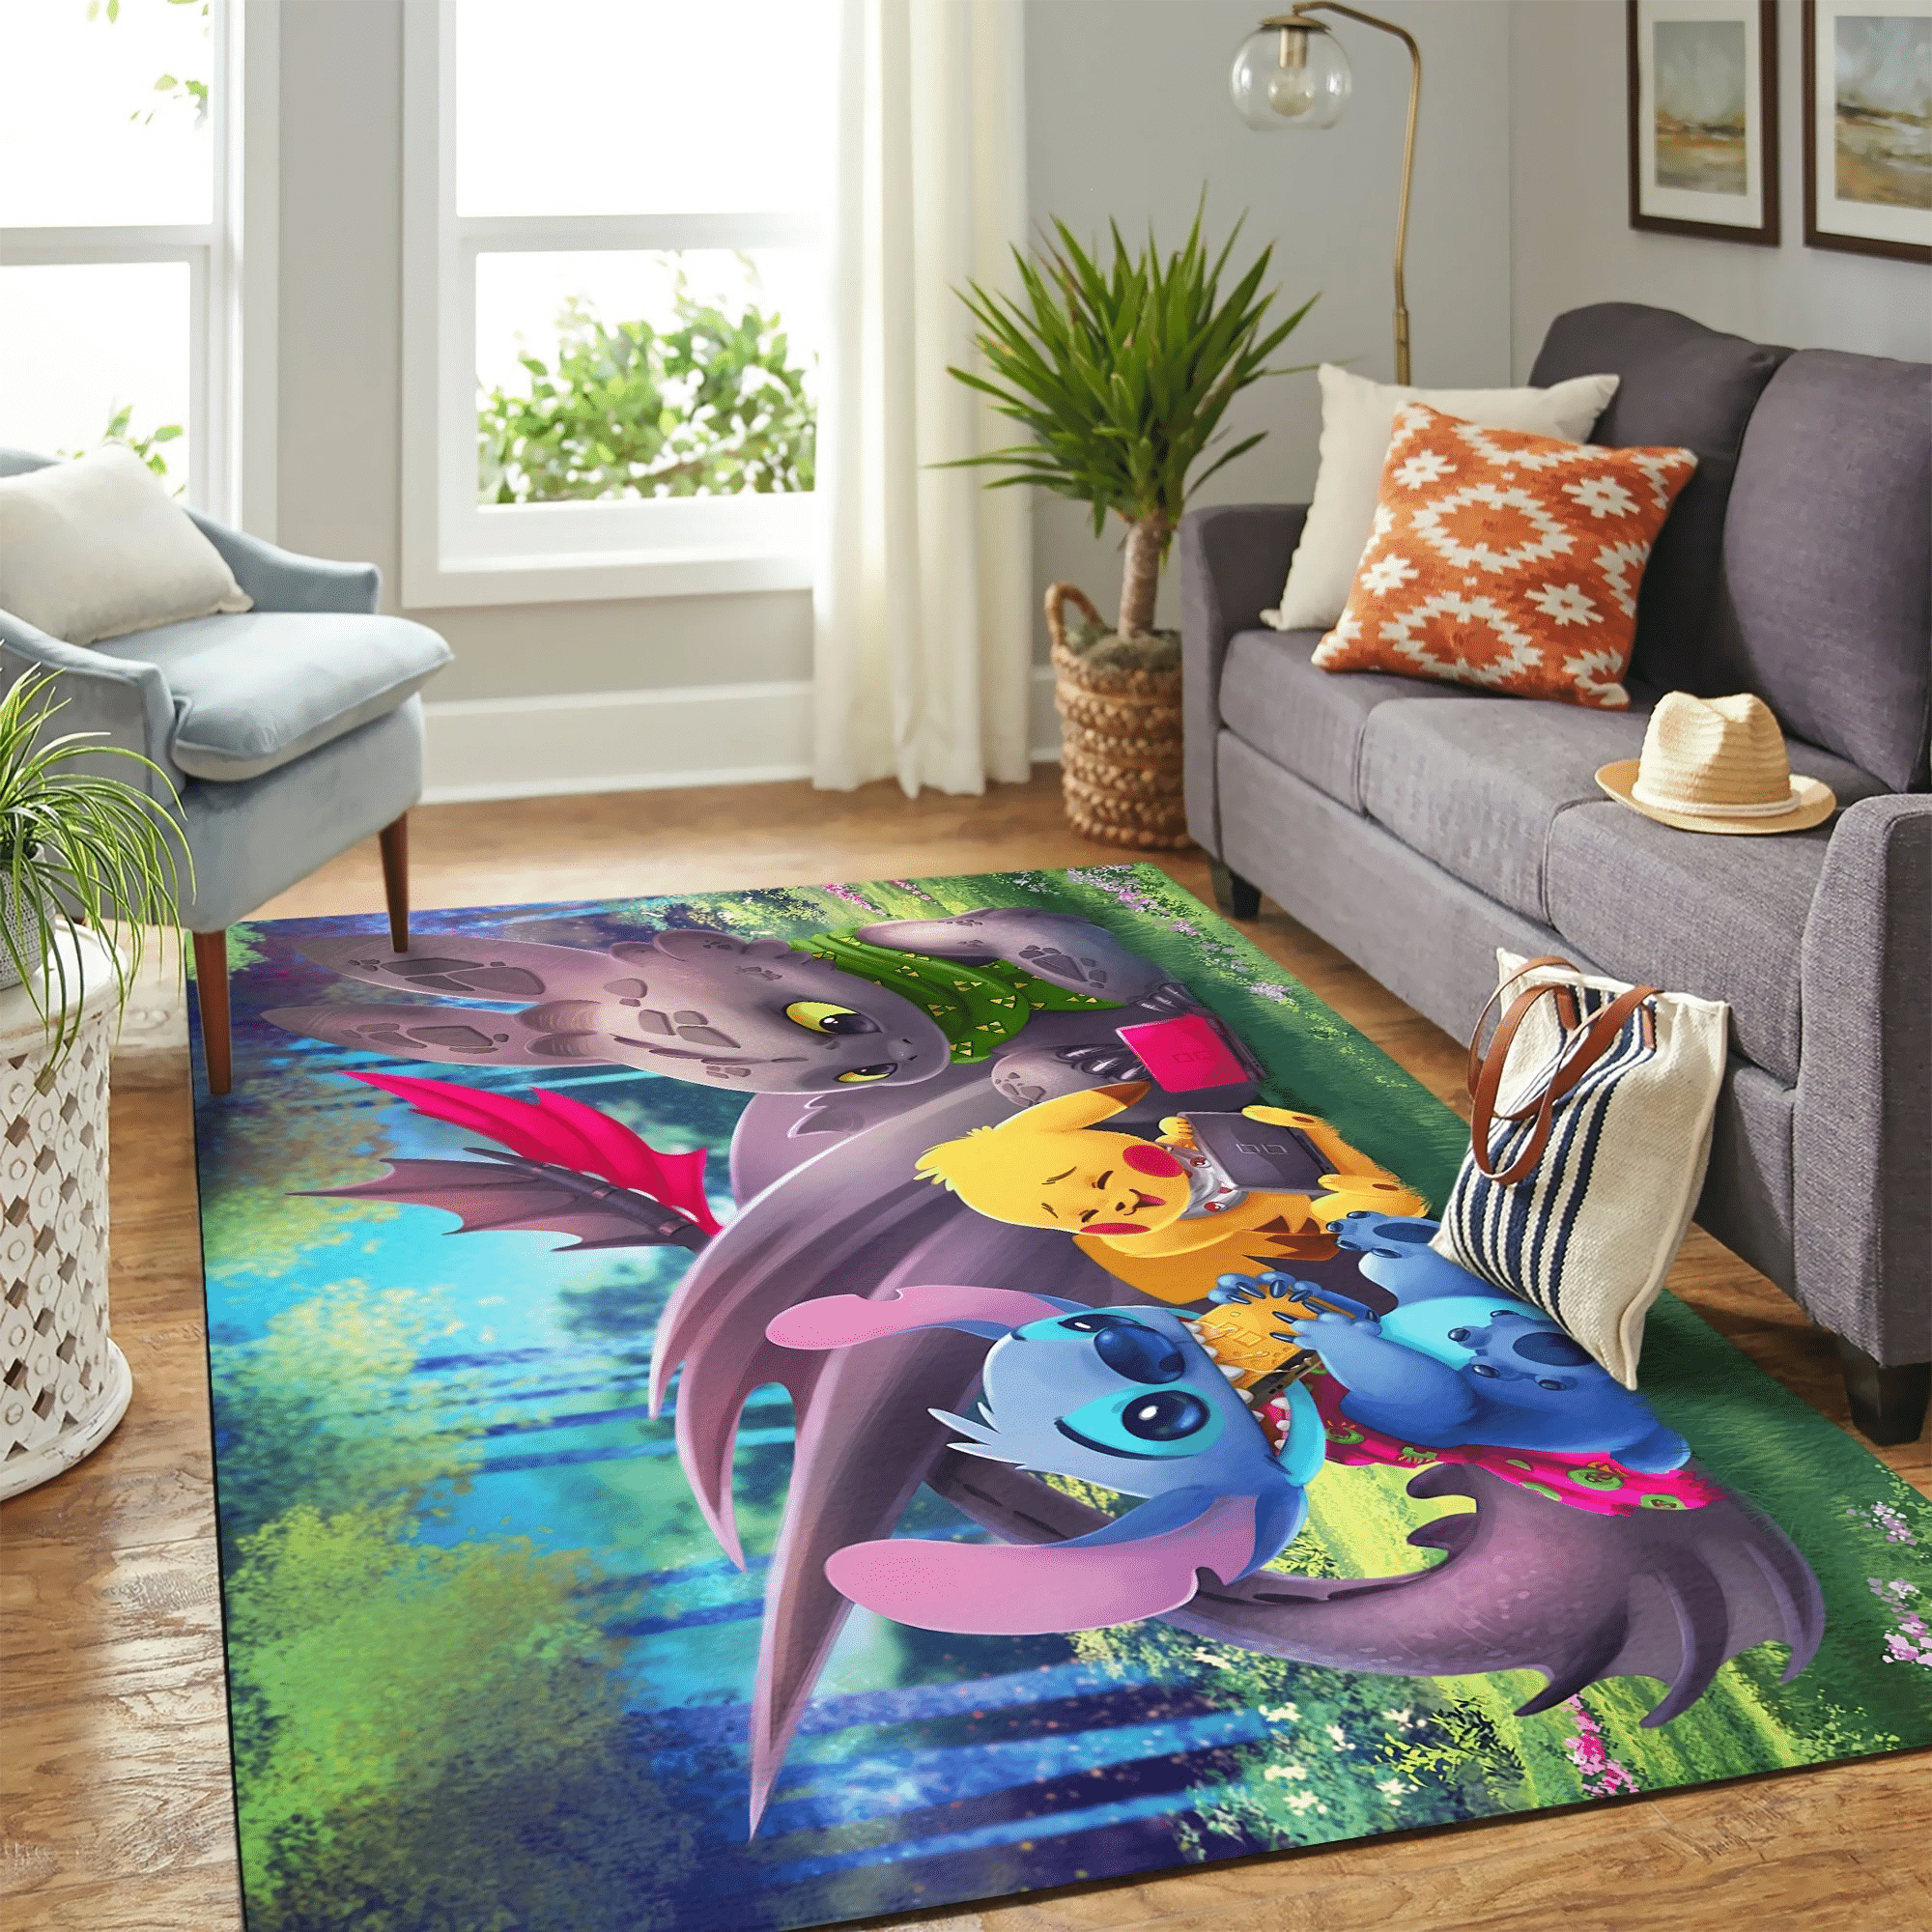 Toothless Stitch Pikachu Carpet Floor Area Rug Chrismas Gift - Indoor Outdoor Rugs